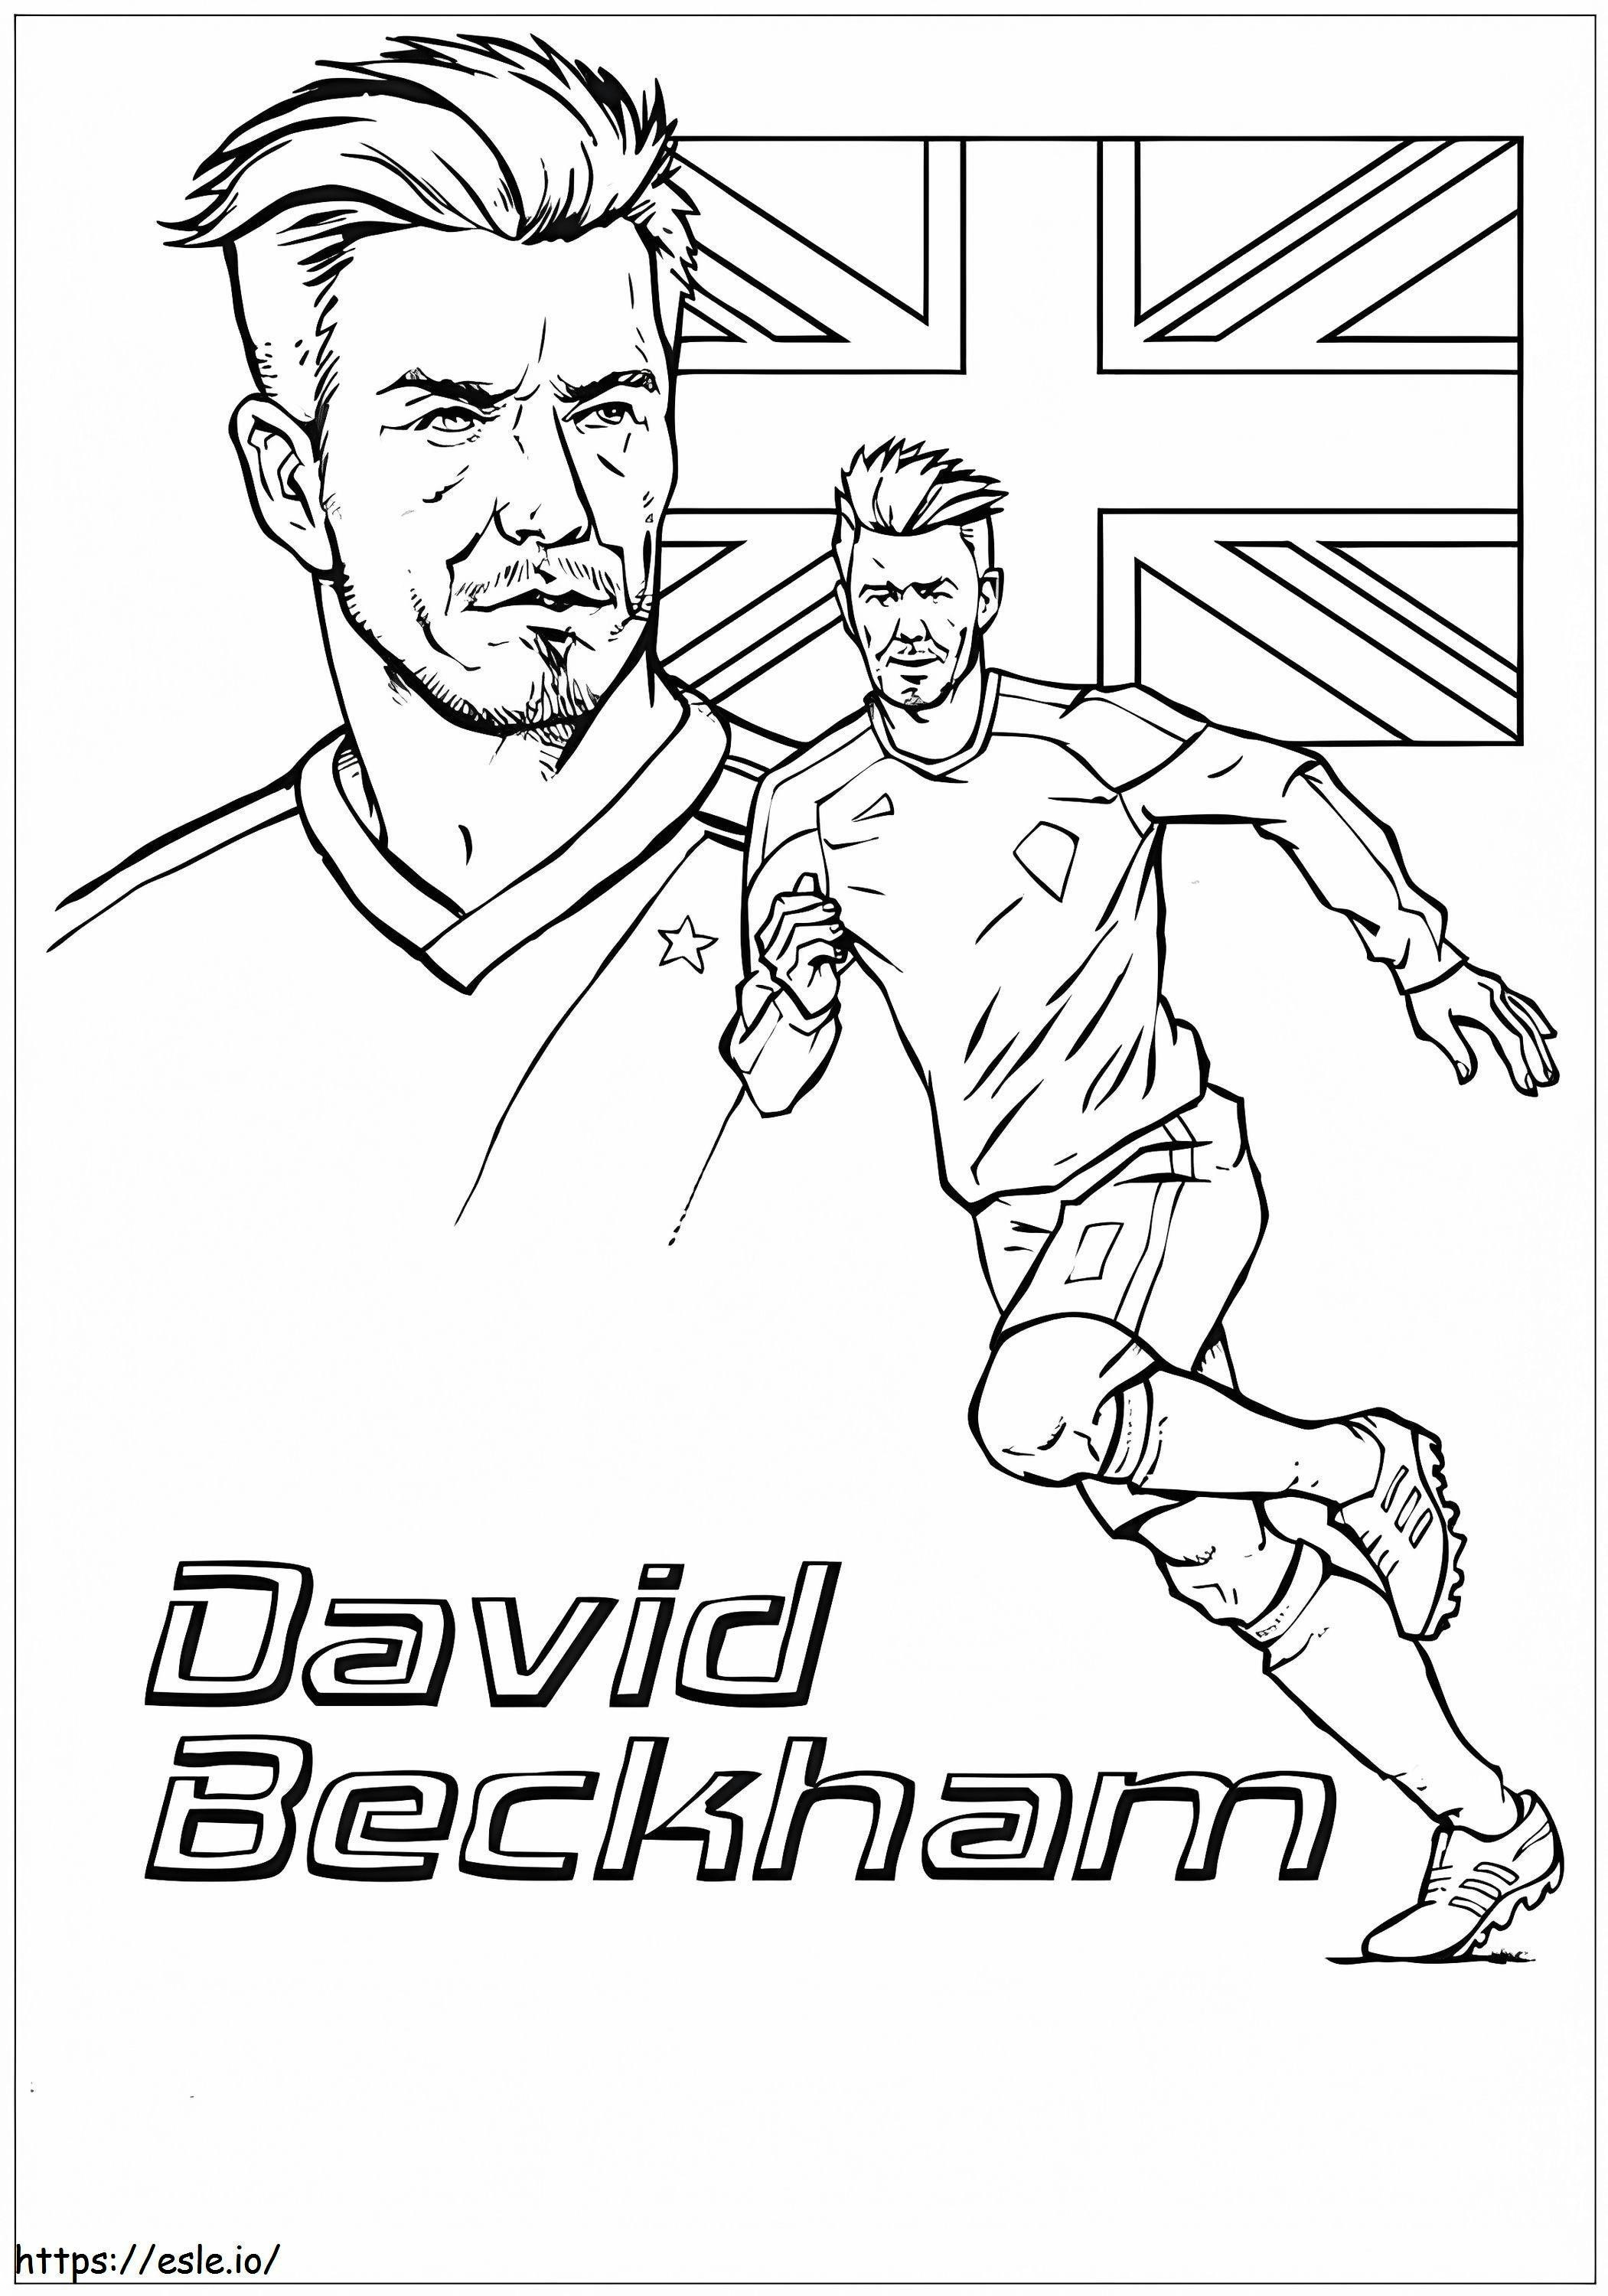 David Beckham alergând de colorat